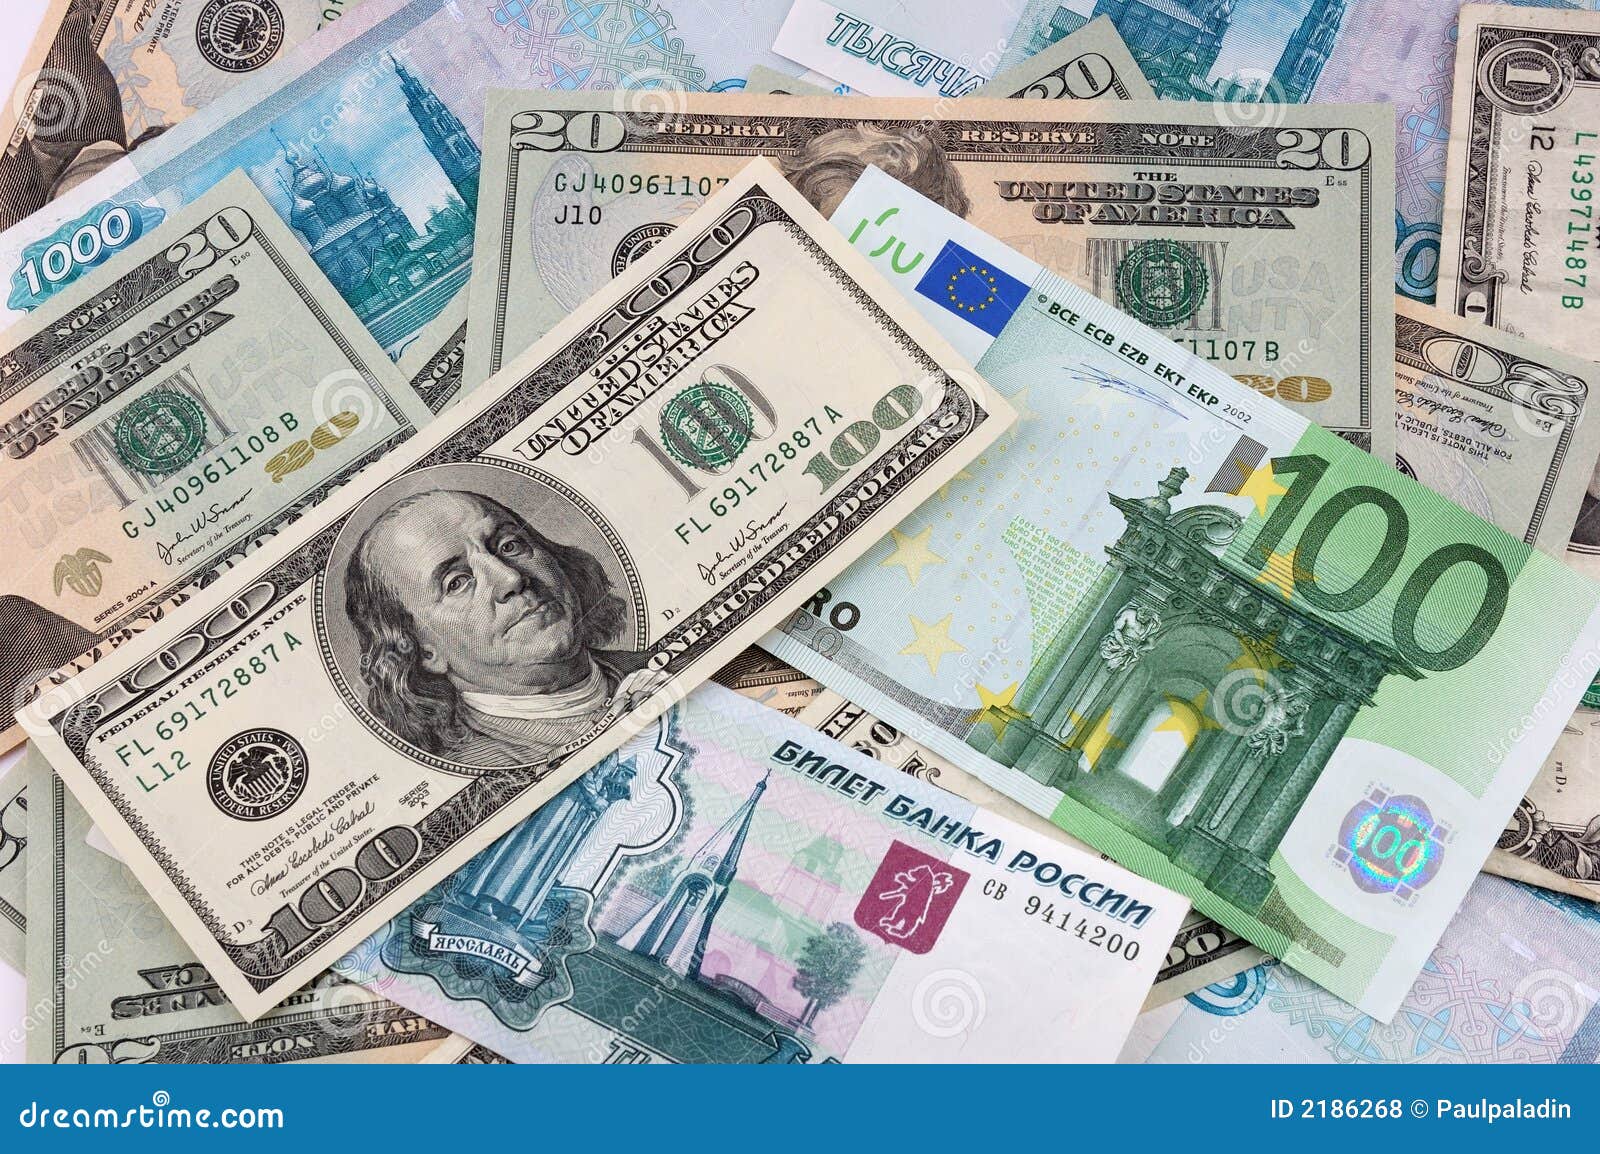 Доллары б рублях. Доллар и евро. Доллар и евро рисунок. Купюры евро и доллара. Купюры евро доллары рубли.